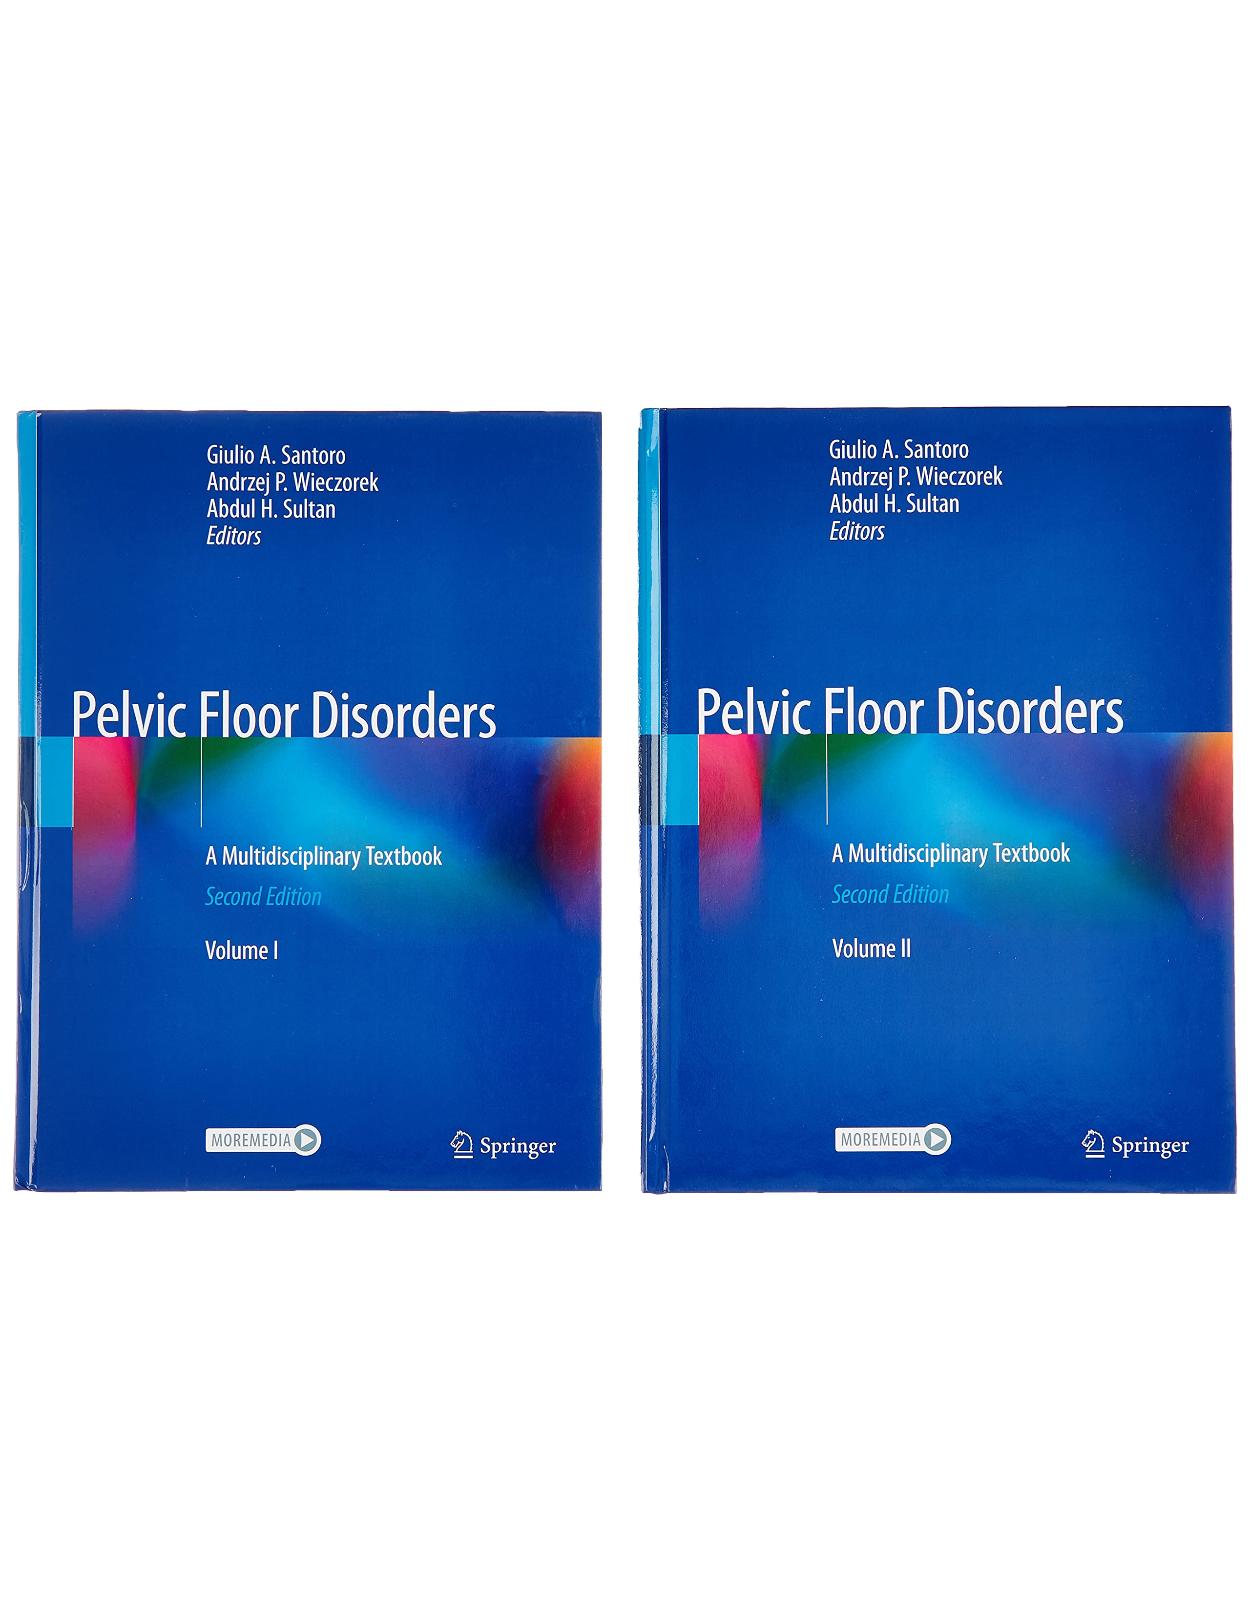 Pelvic Floor Disorders: A Multidisciplinary Textbook